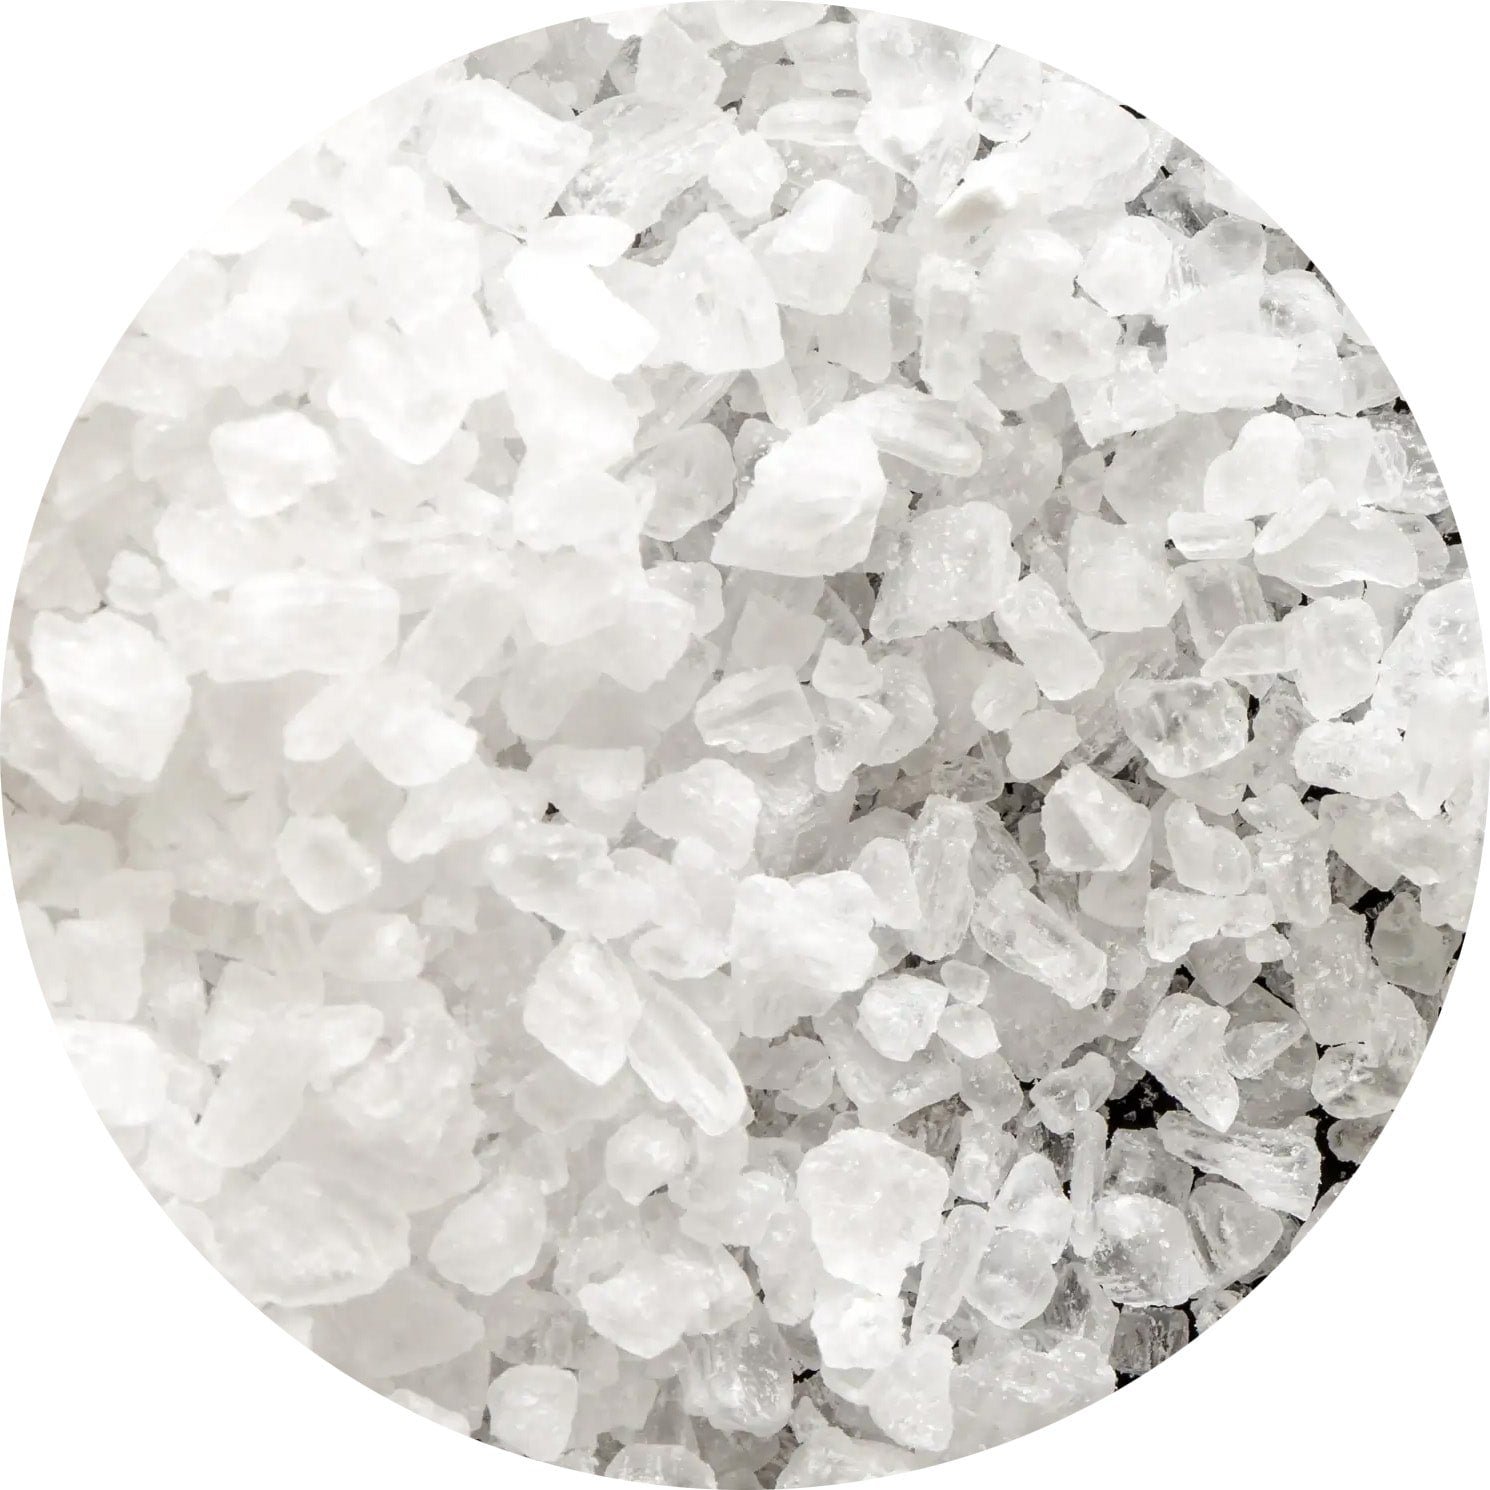 close up photo of granules of sodium